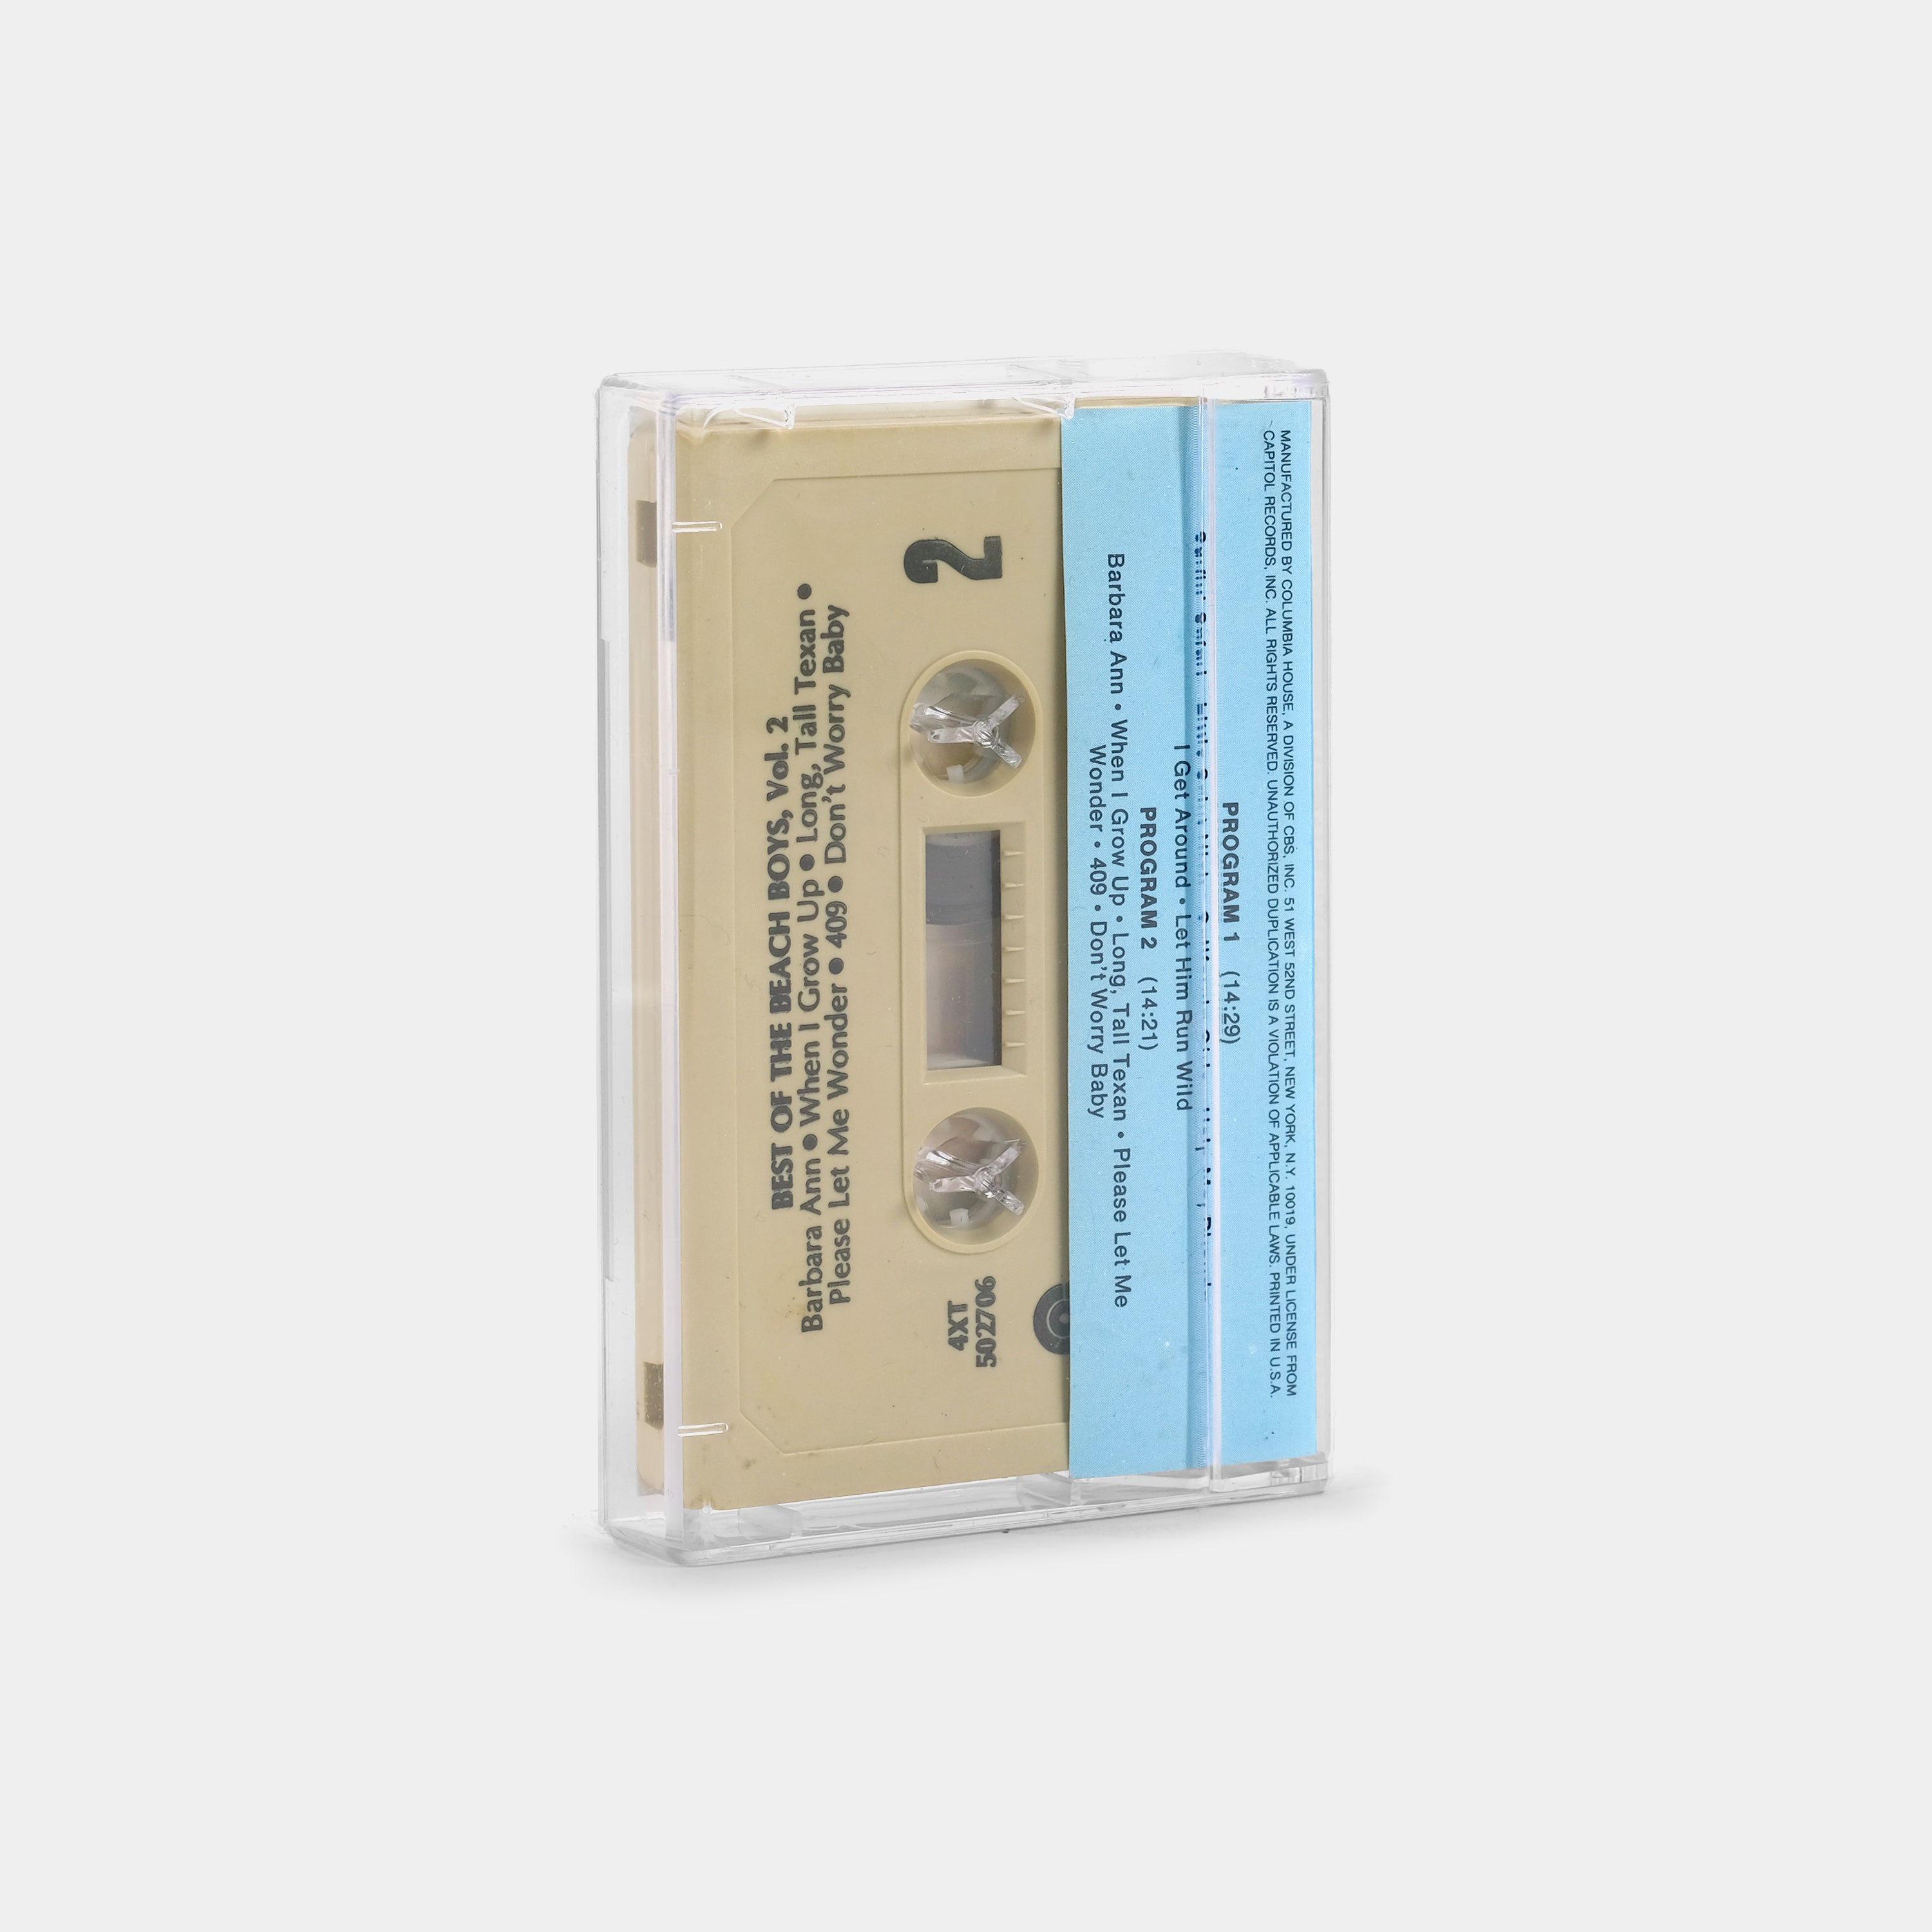 The Beach Boys - Best Of The Beach Boys, Vol. 2 Cassette Tape